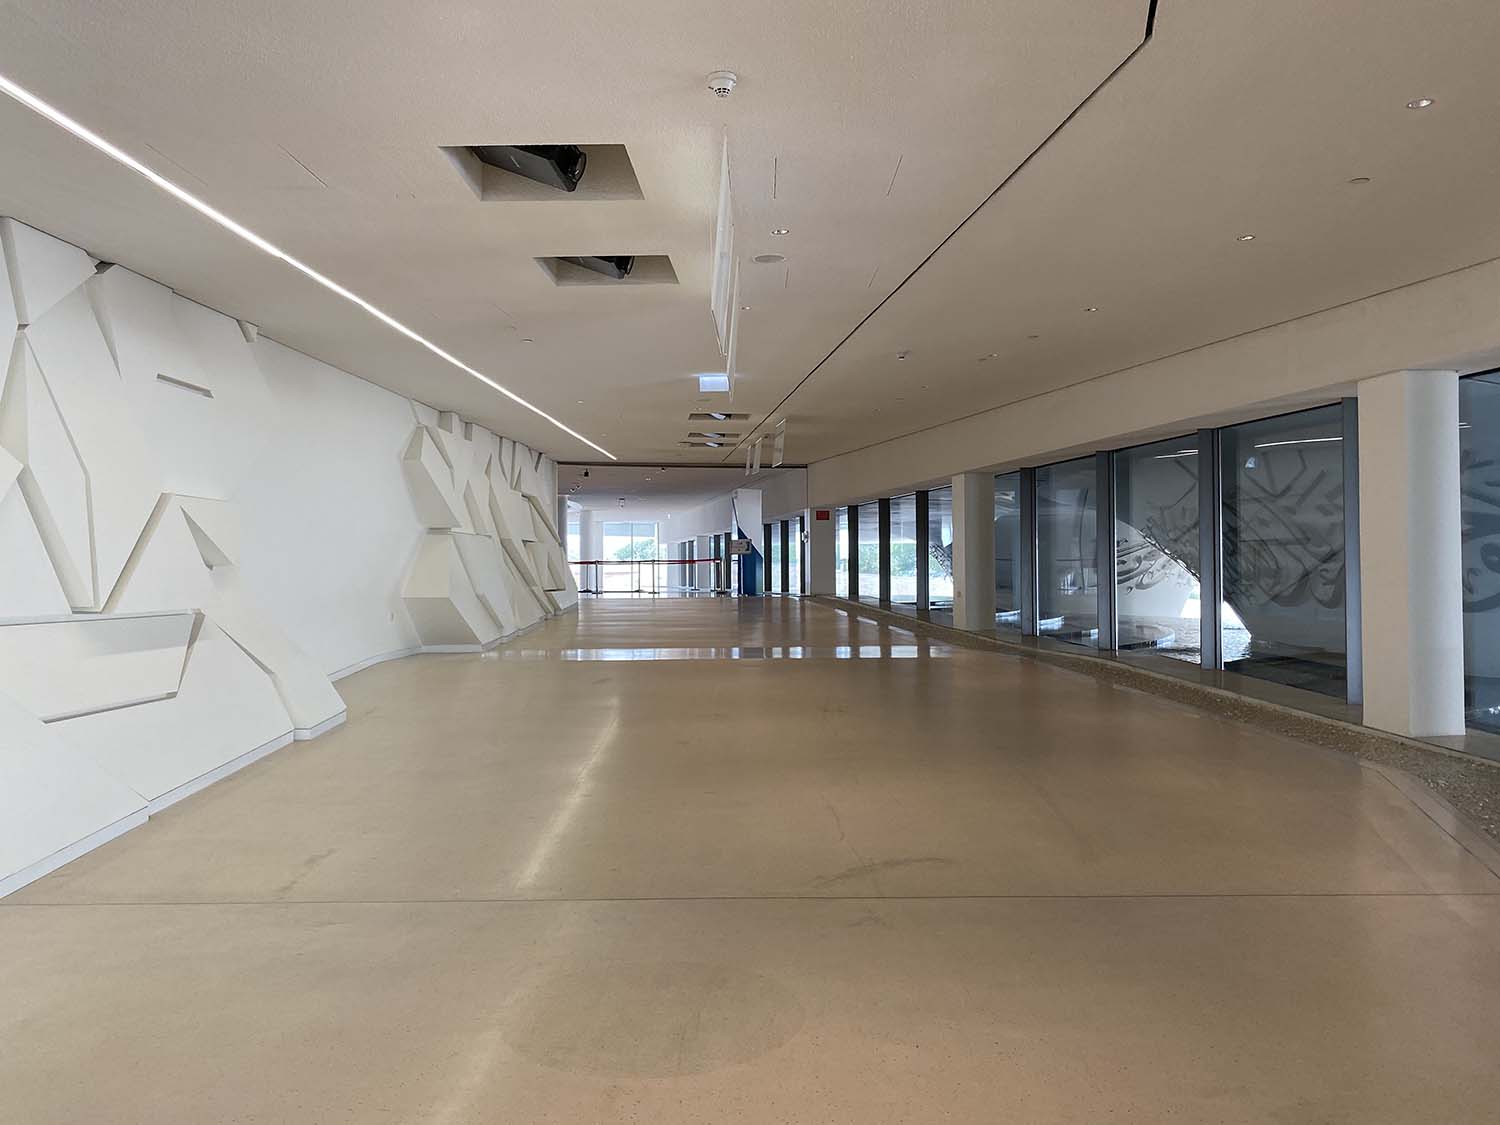 Hamad Bin Khalifa University College of Islamic Studies (QFIS) - Interior view